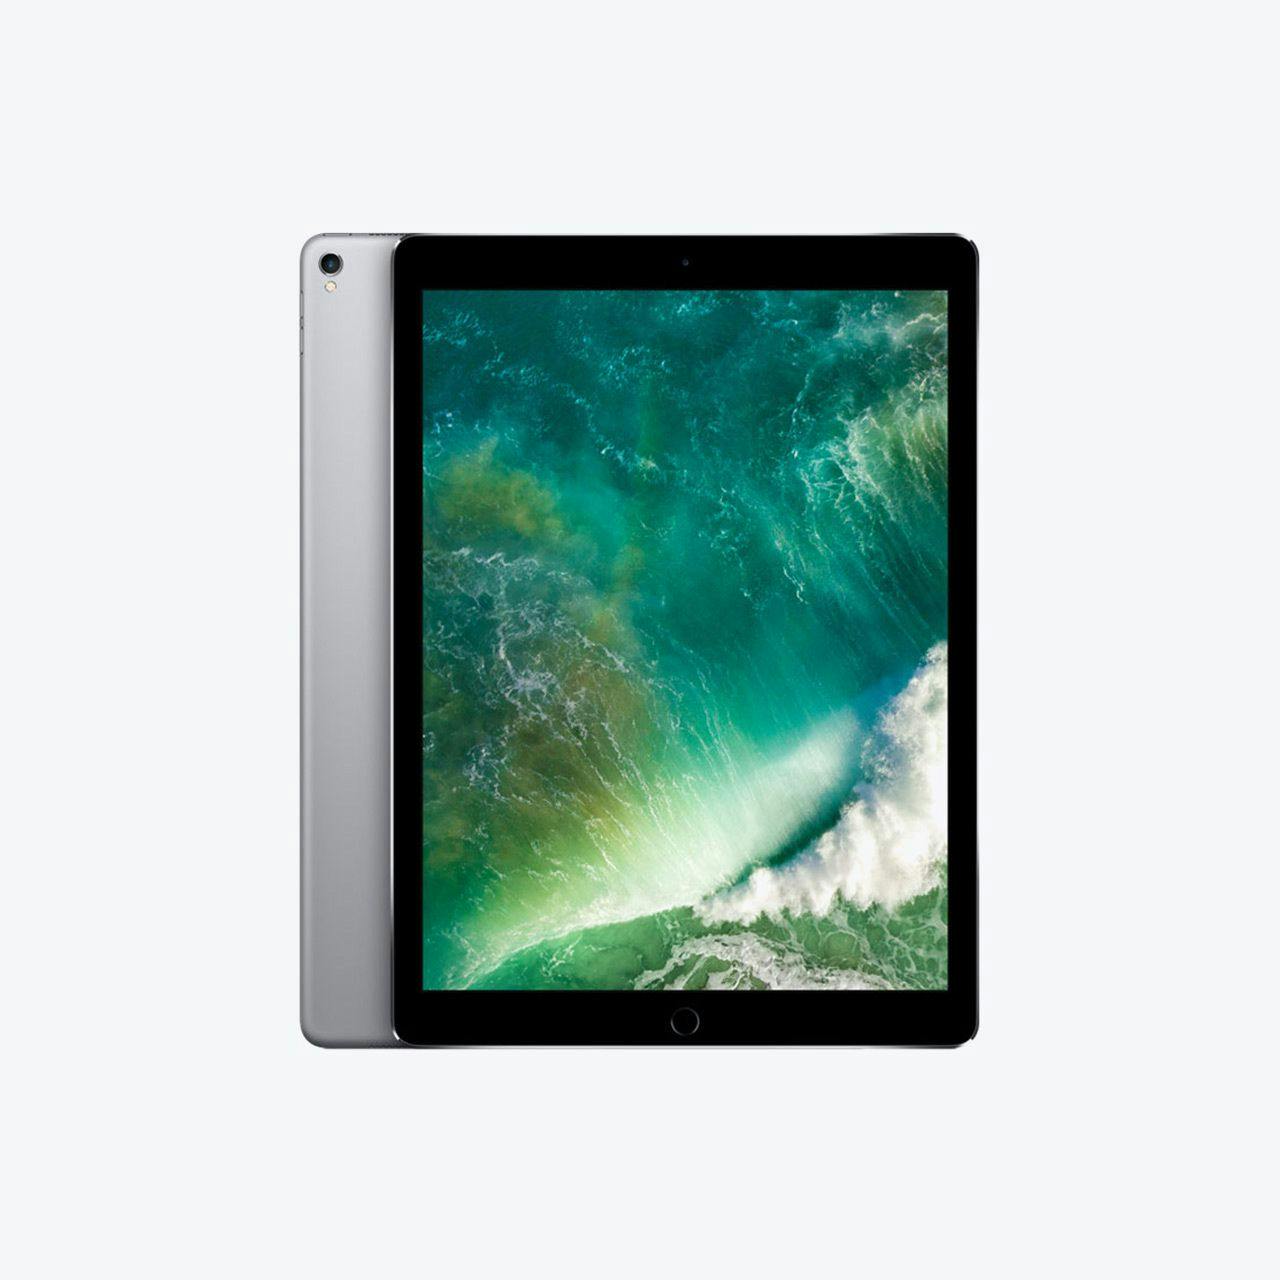 Image of iPad Pro 12.9-inch (2nd Generation).